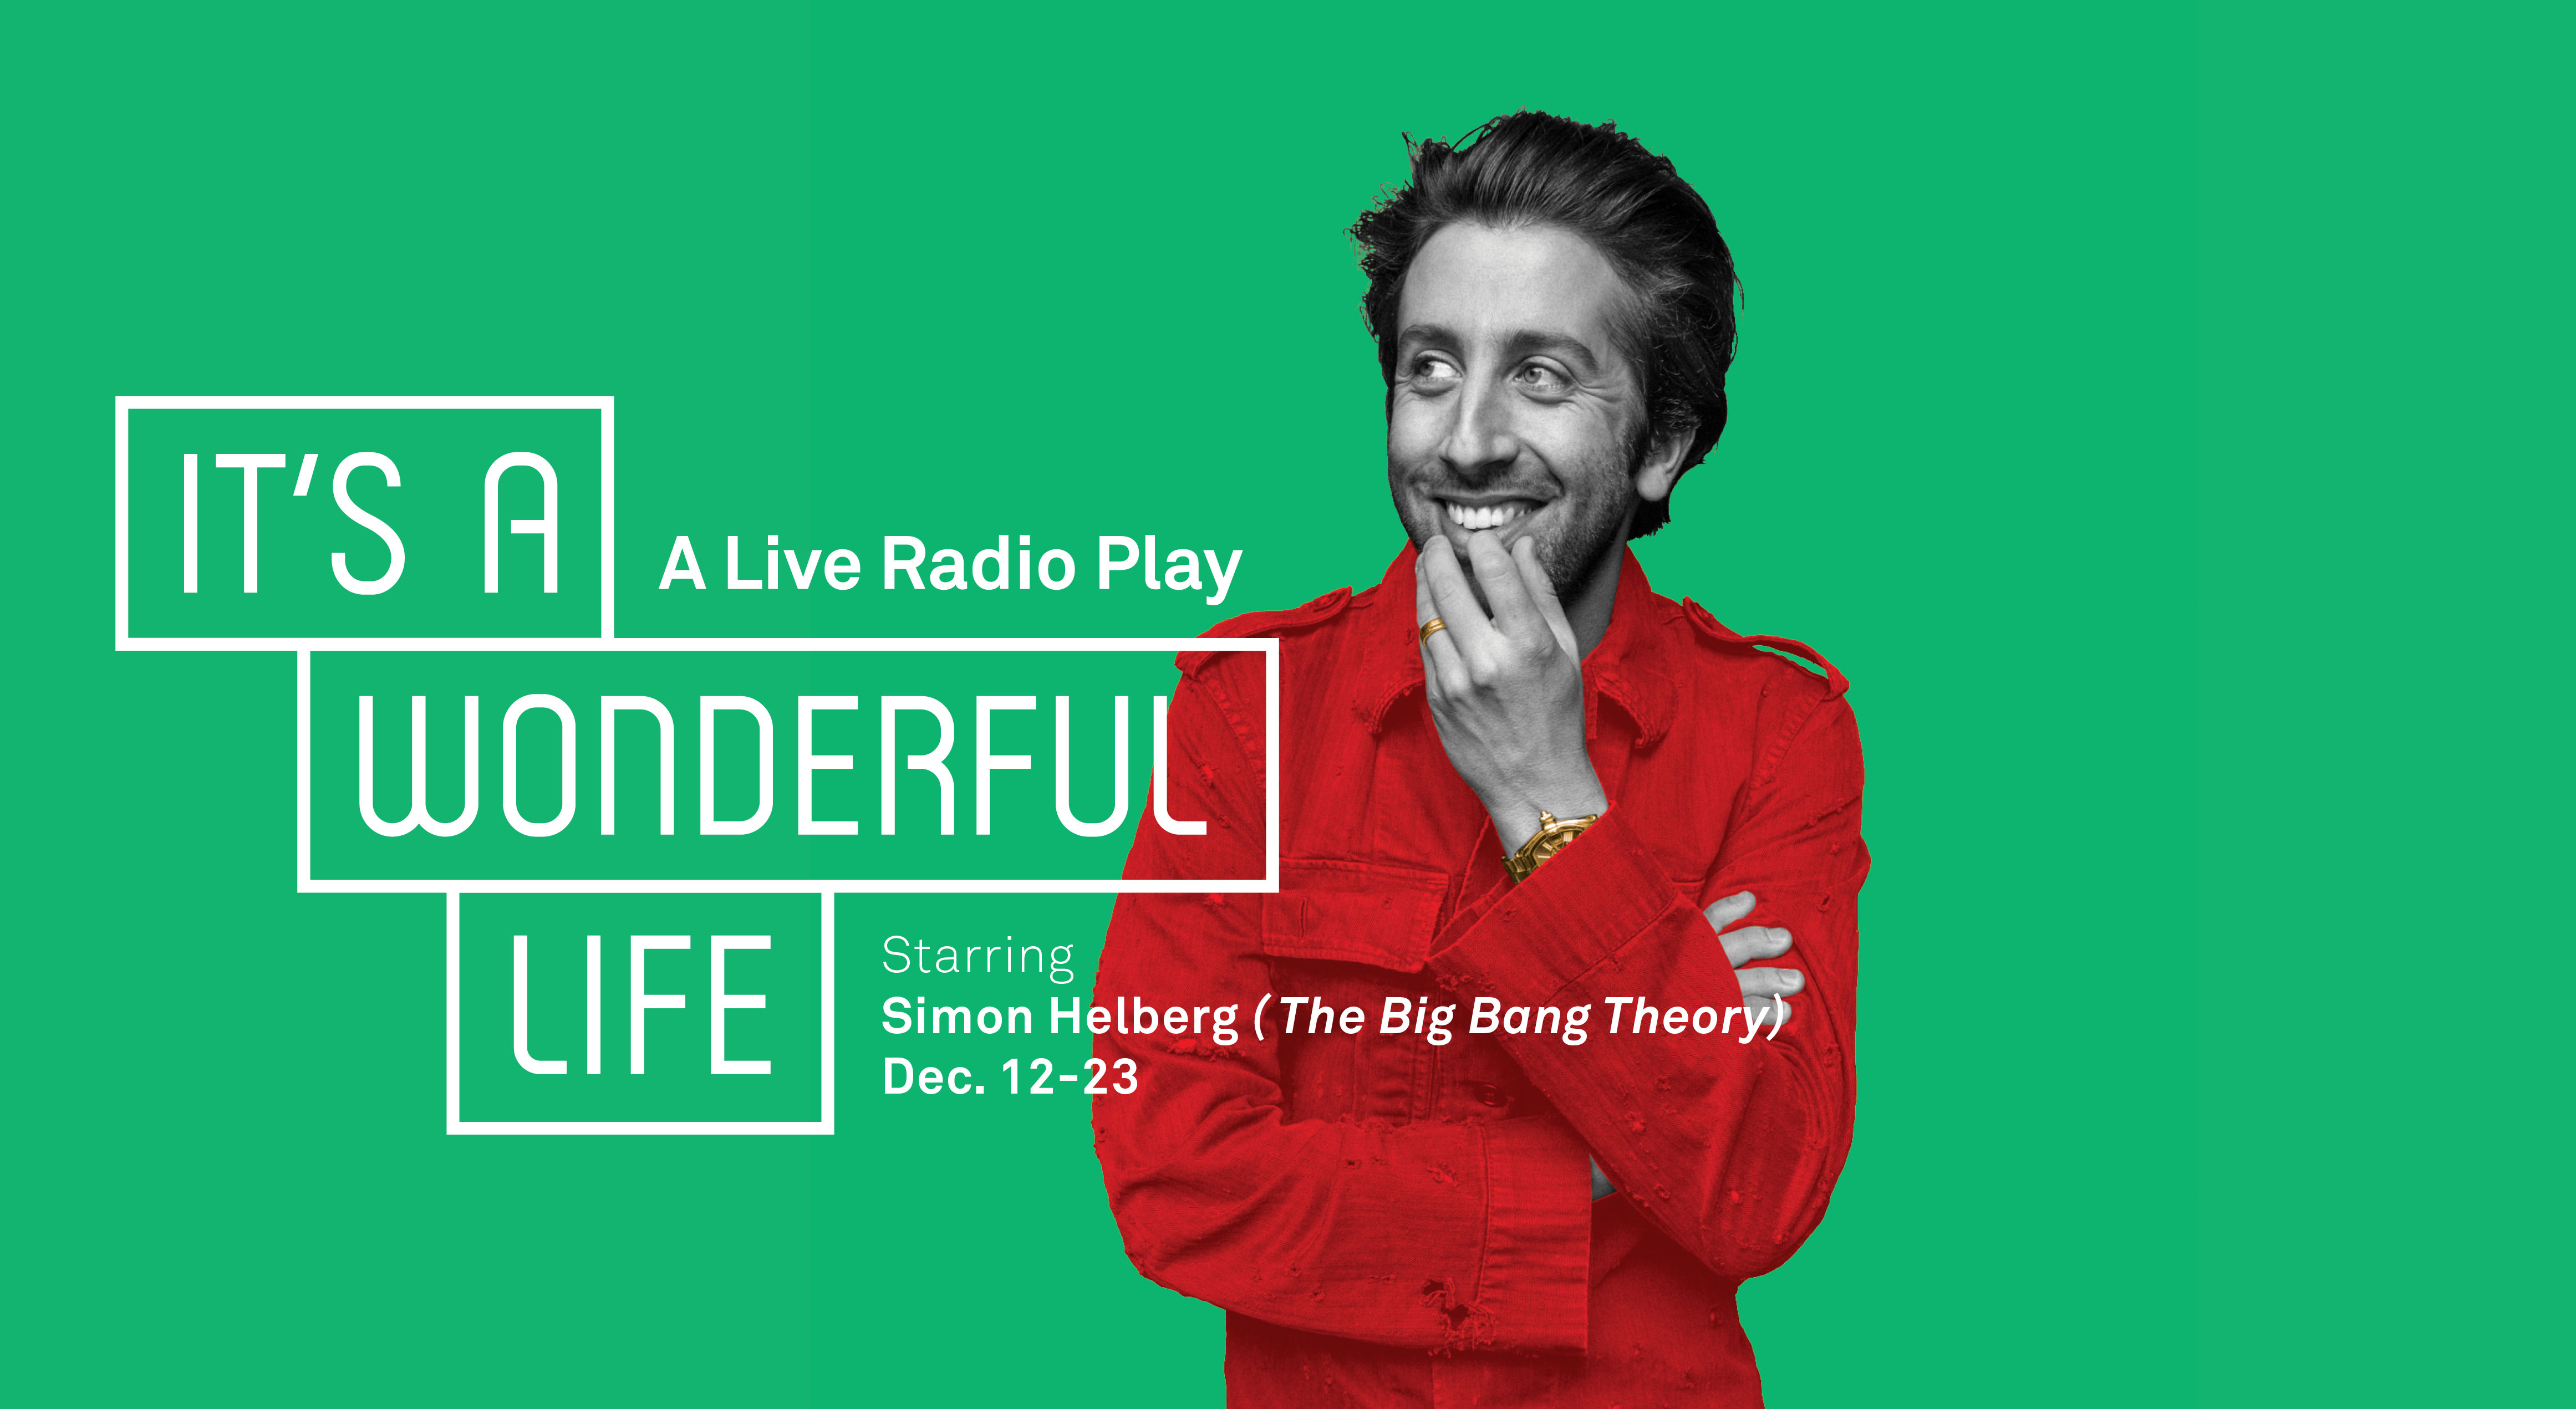 It’s a Wonderful Life: A Live Radio Play